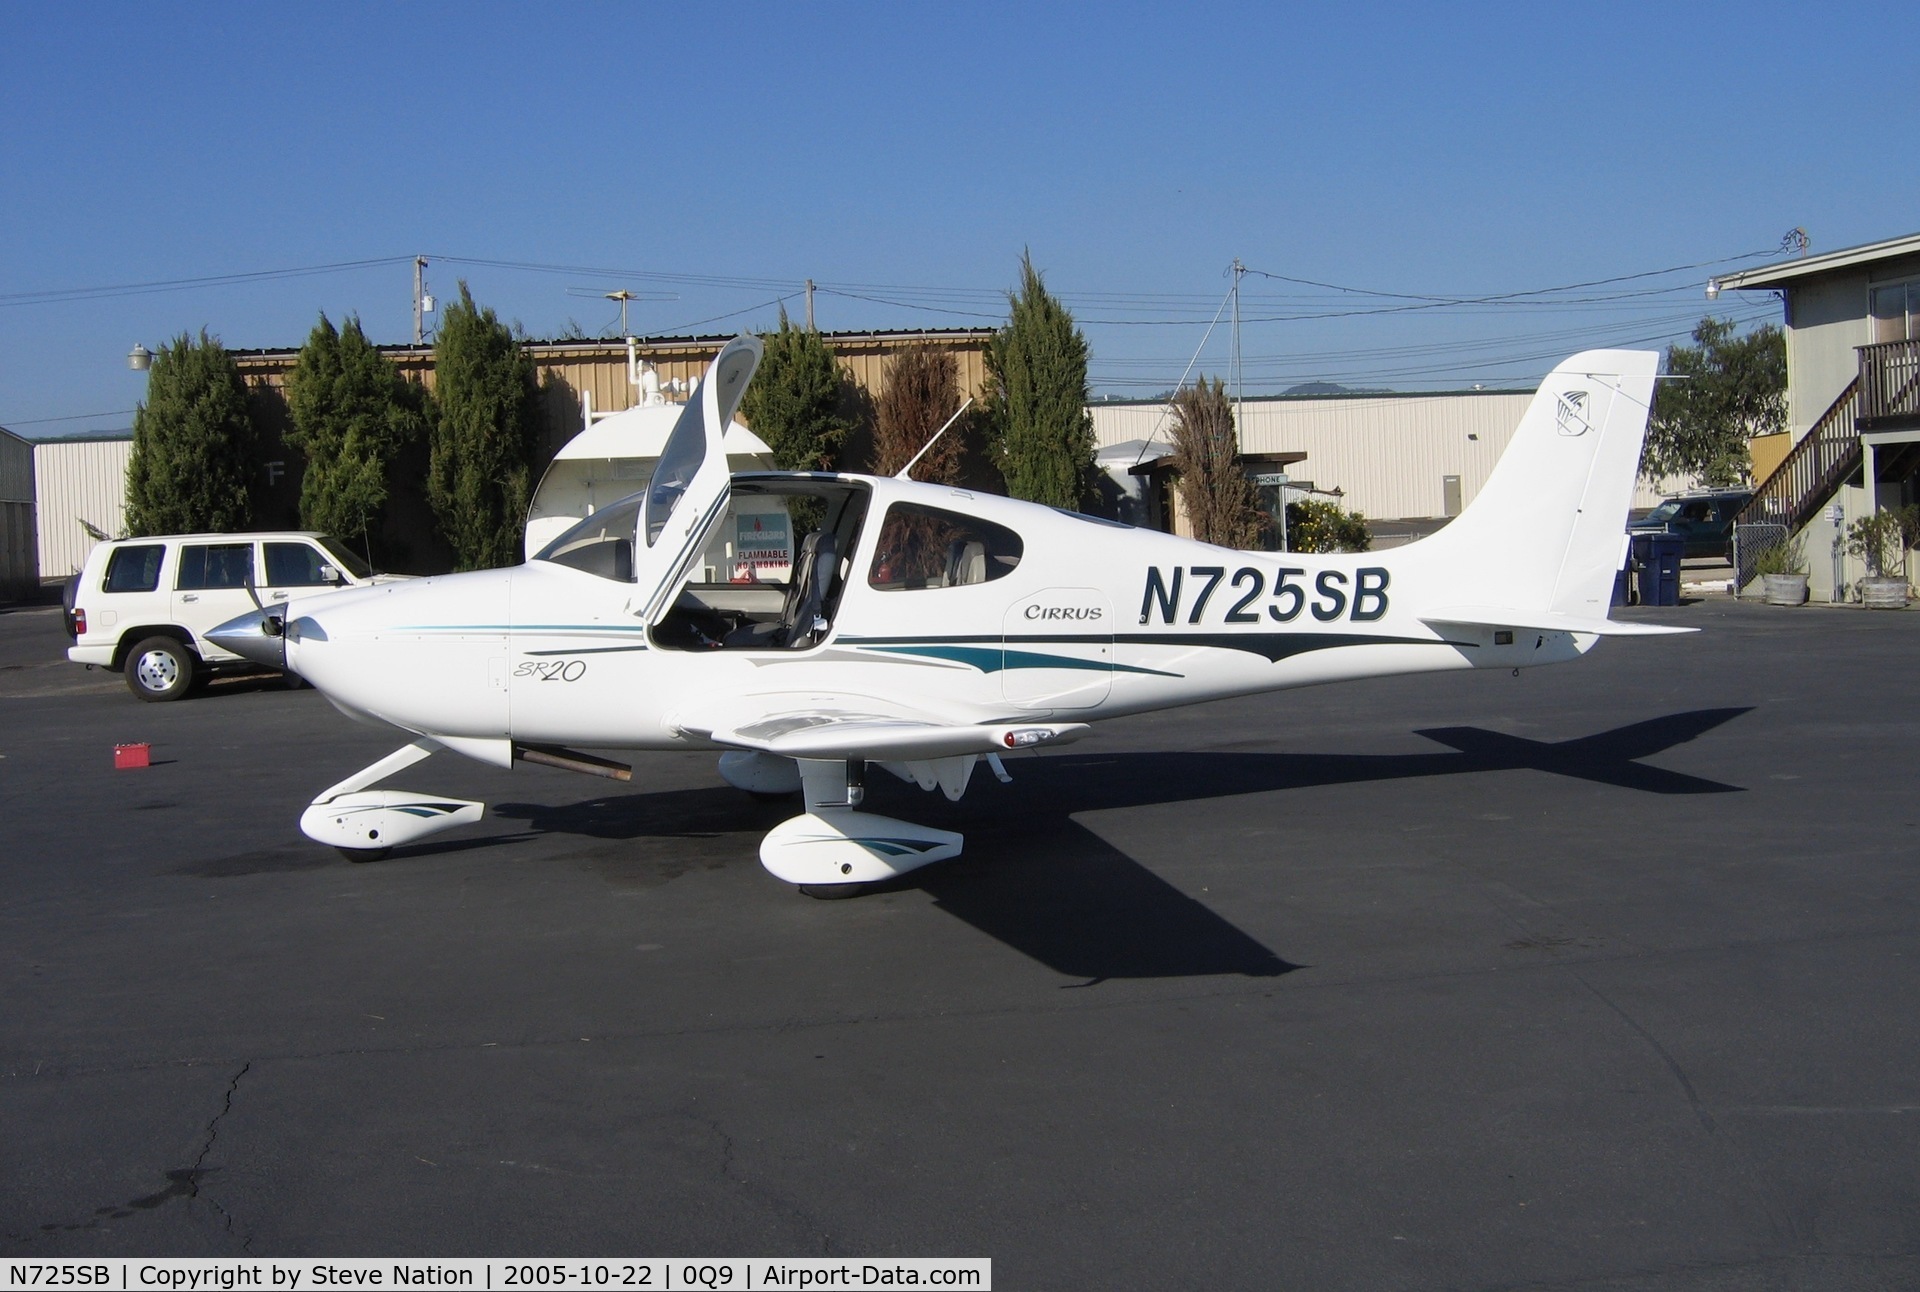 N725SB, Cirrus SR20 C/N 1363, Sanda Aviation 2000 Cirrus Design SR20 in full sun at Sonoma Airpark, CA